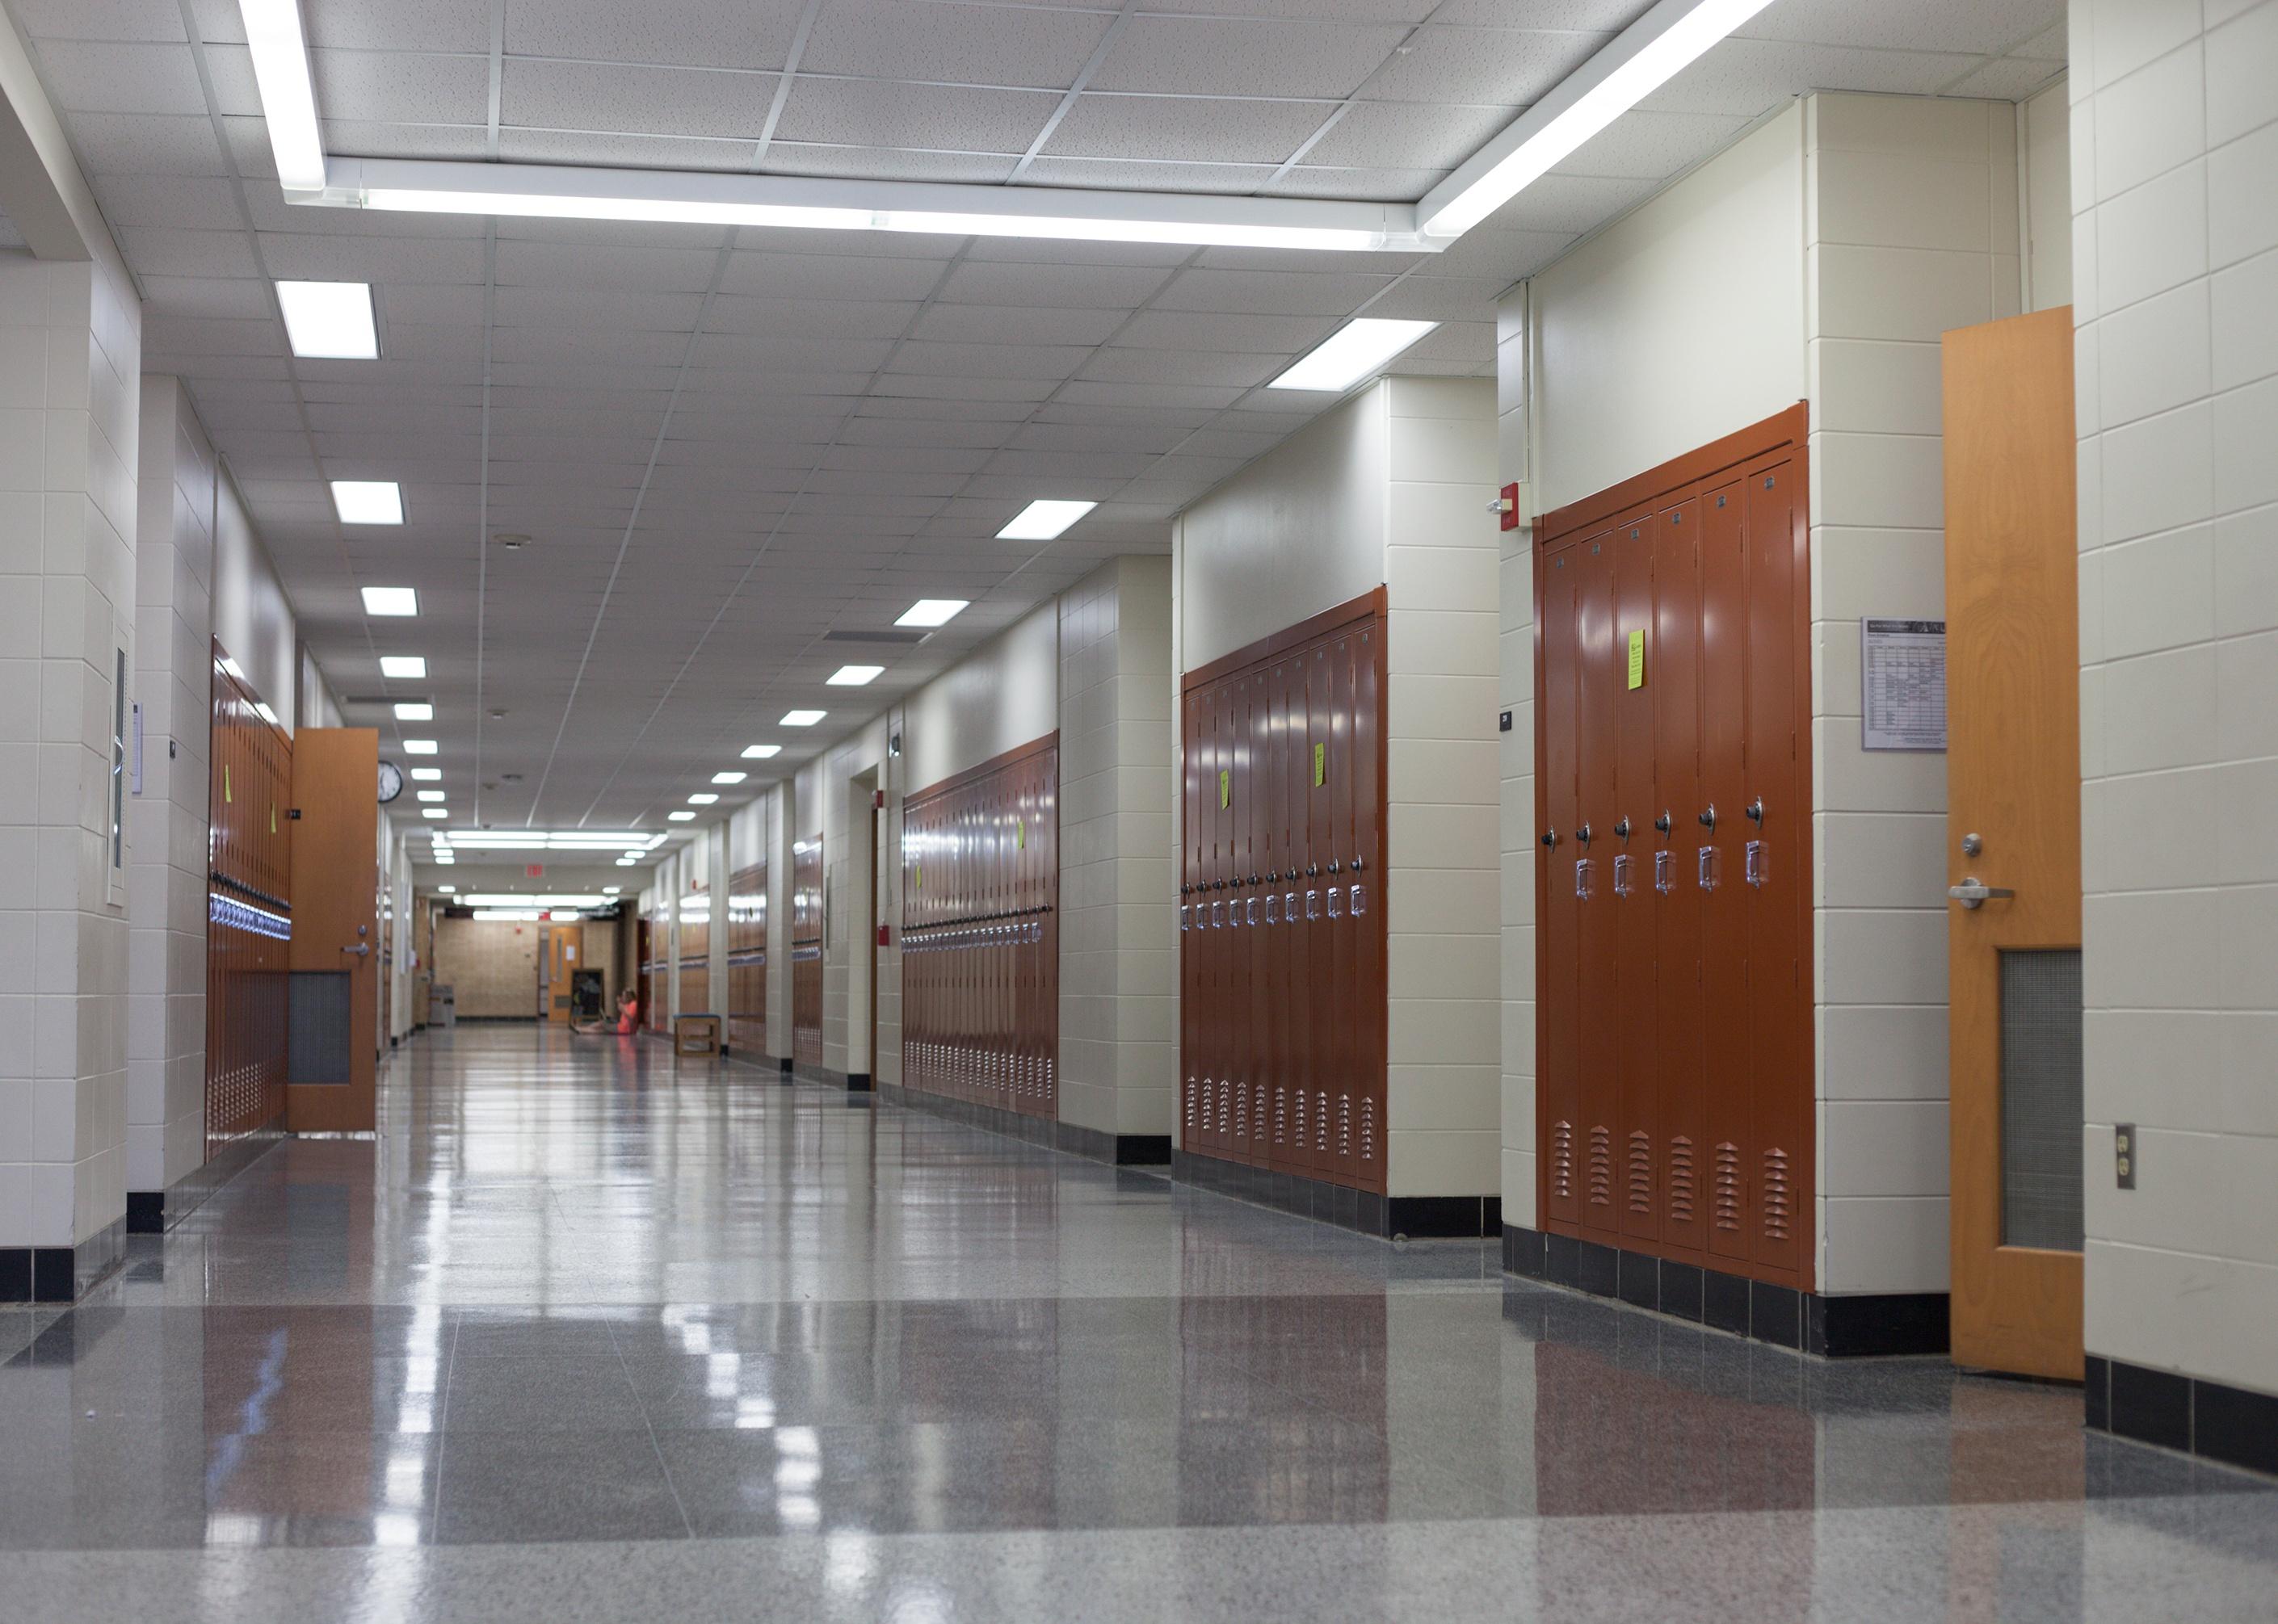 Empty school hallway with lockers.